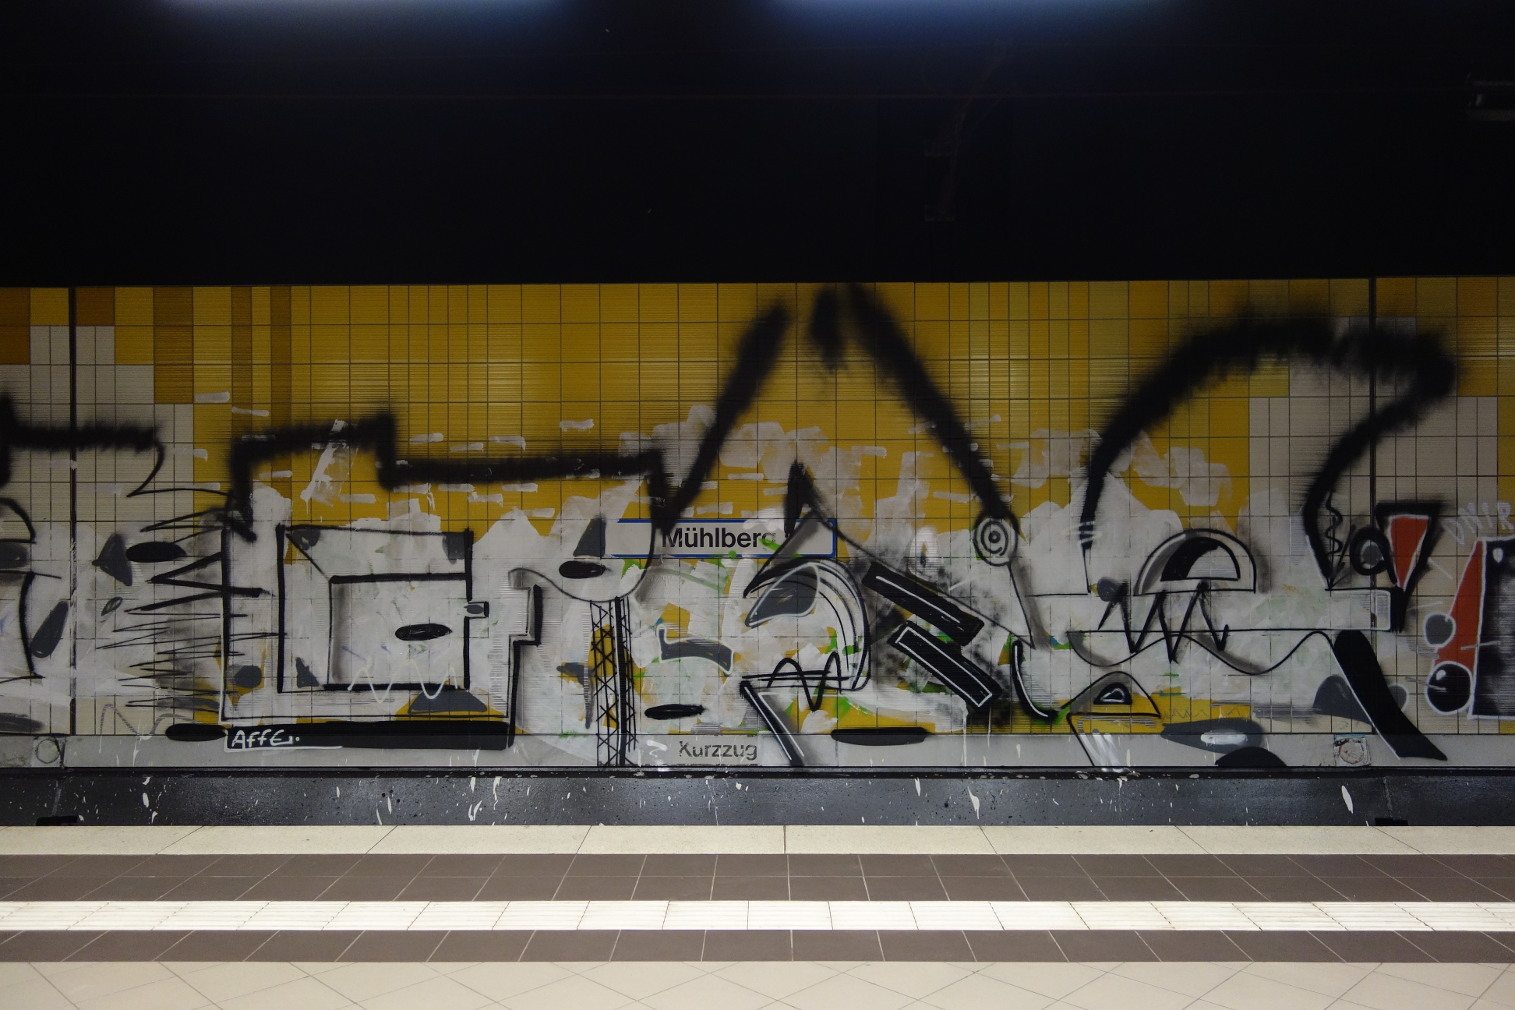 graffiti in urban railway station Mühlberg in Frankfurt am Main